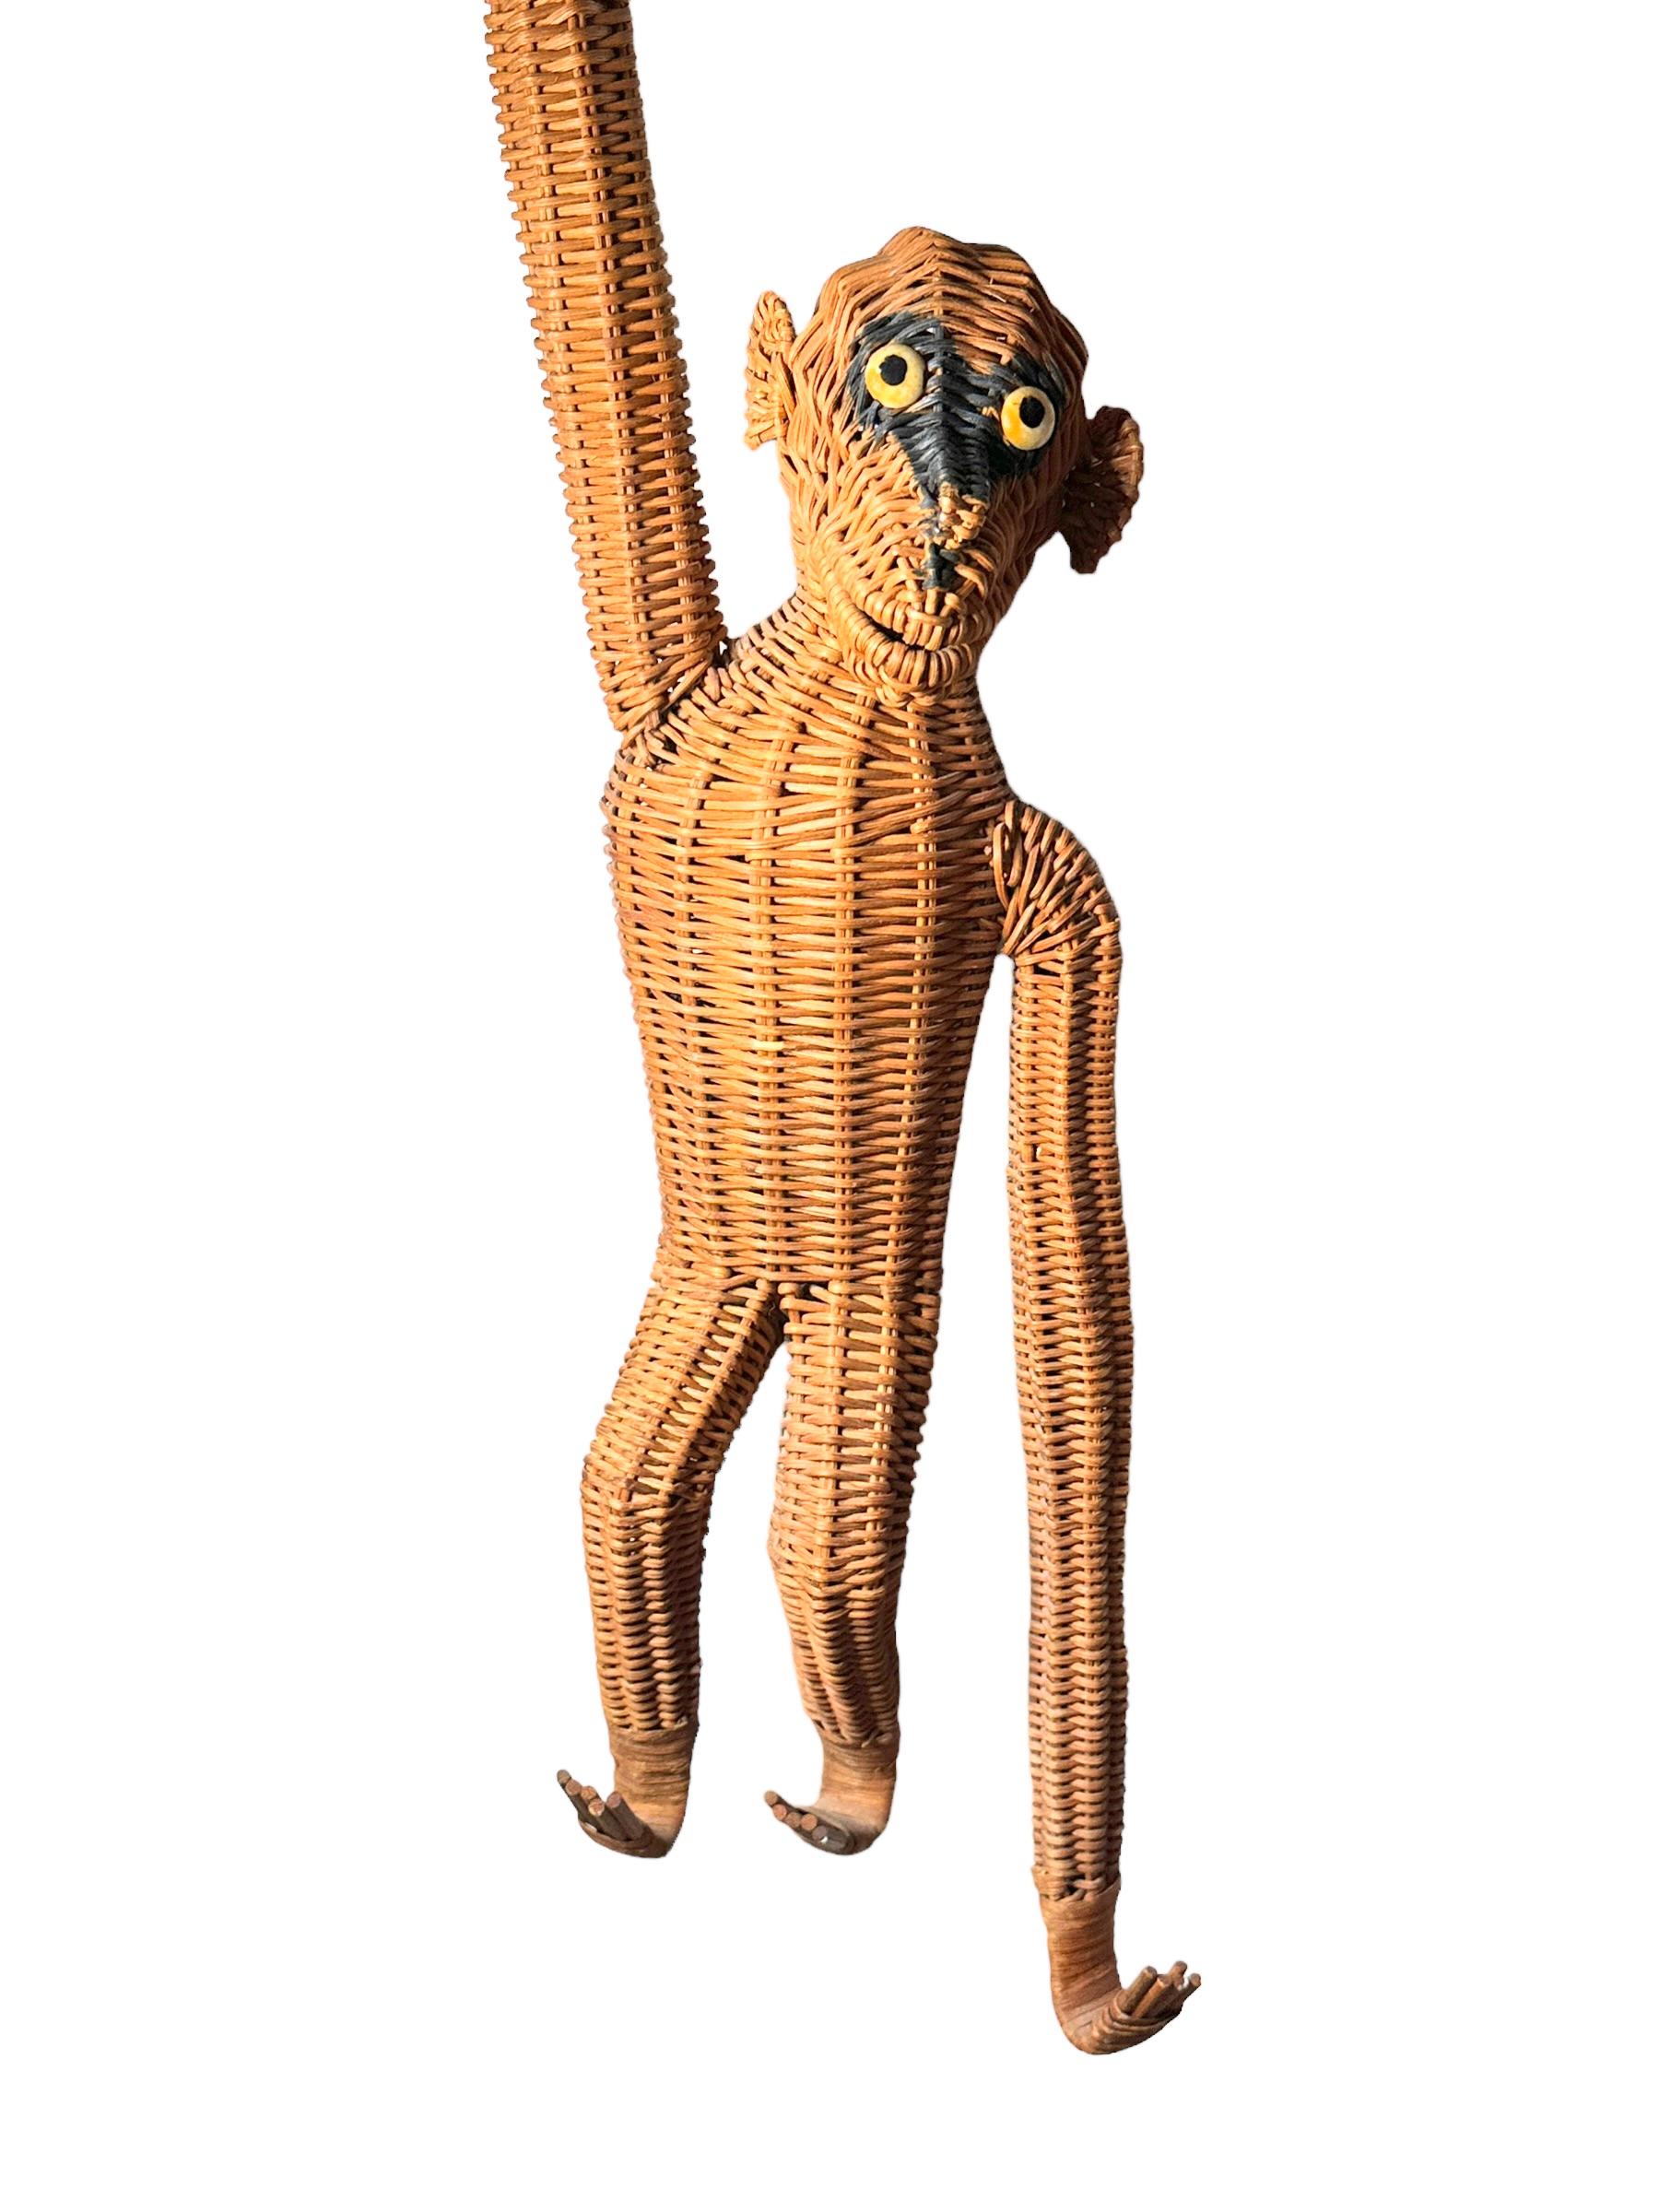 Mid-Century Modern Monkey Ape Rattan Wicker Hanging Figure 1970s, France For Sale 6